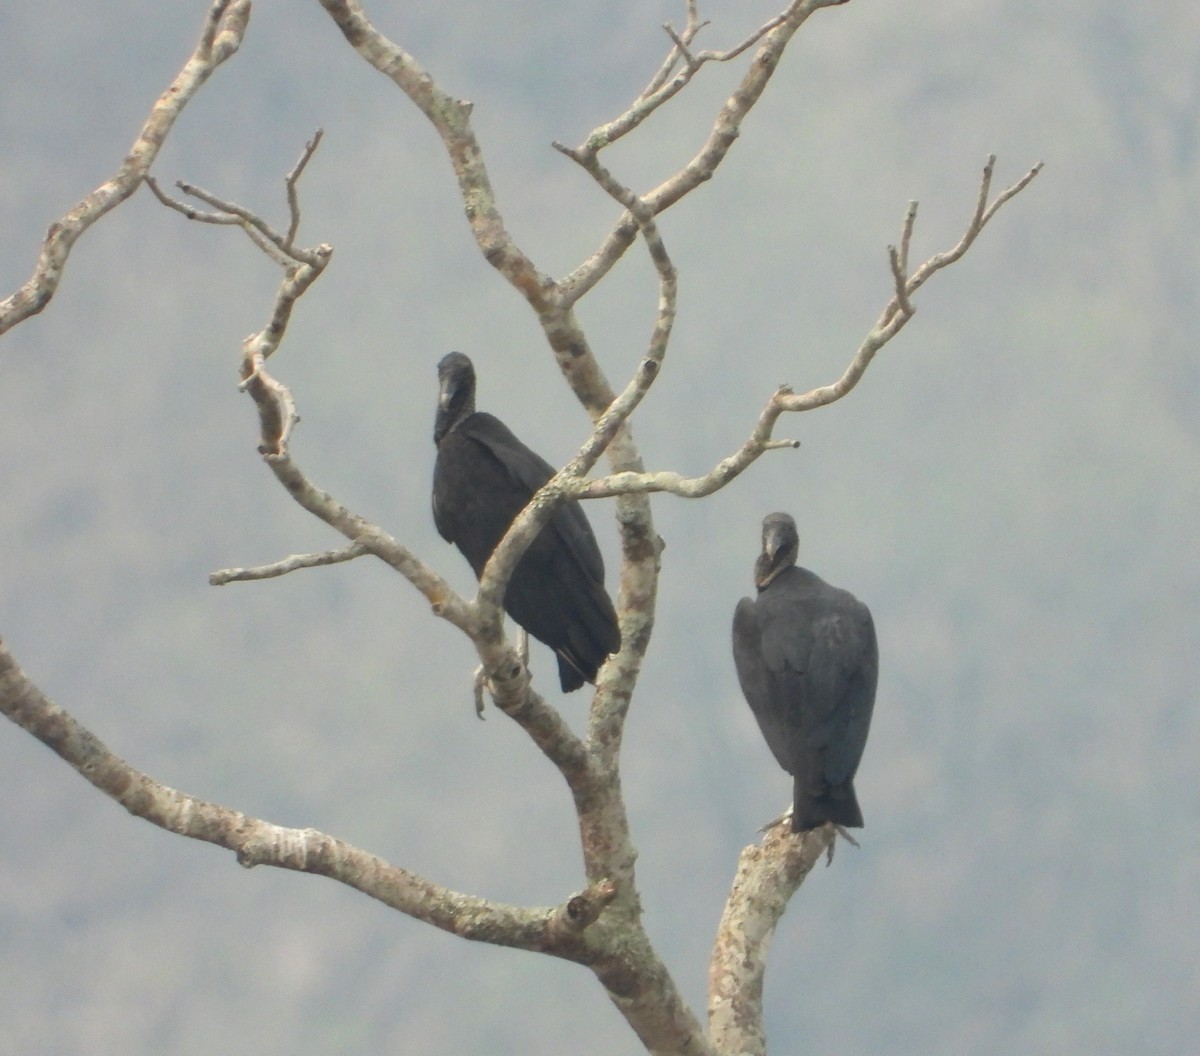 Black Vulture - Francisco Rovelo